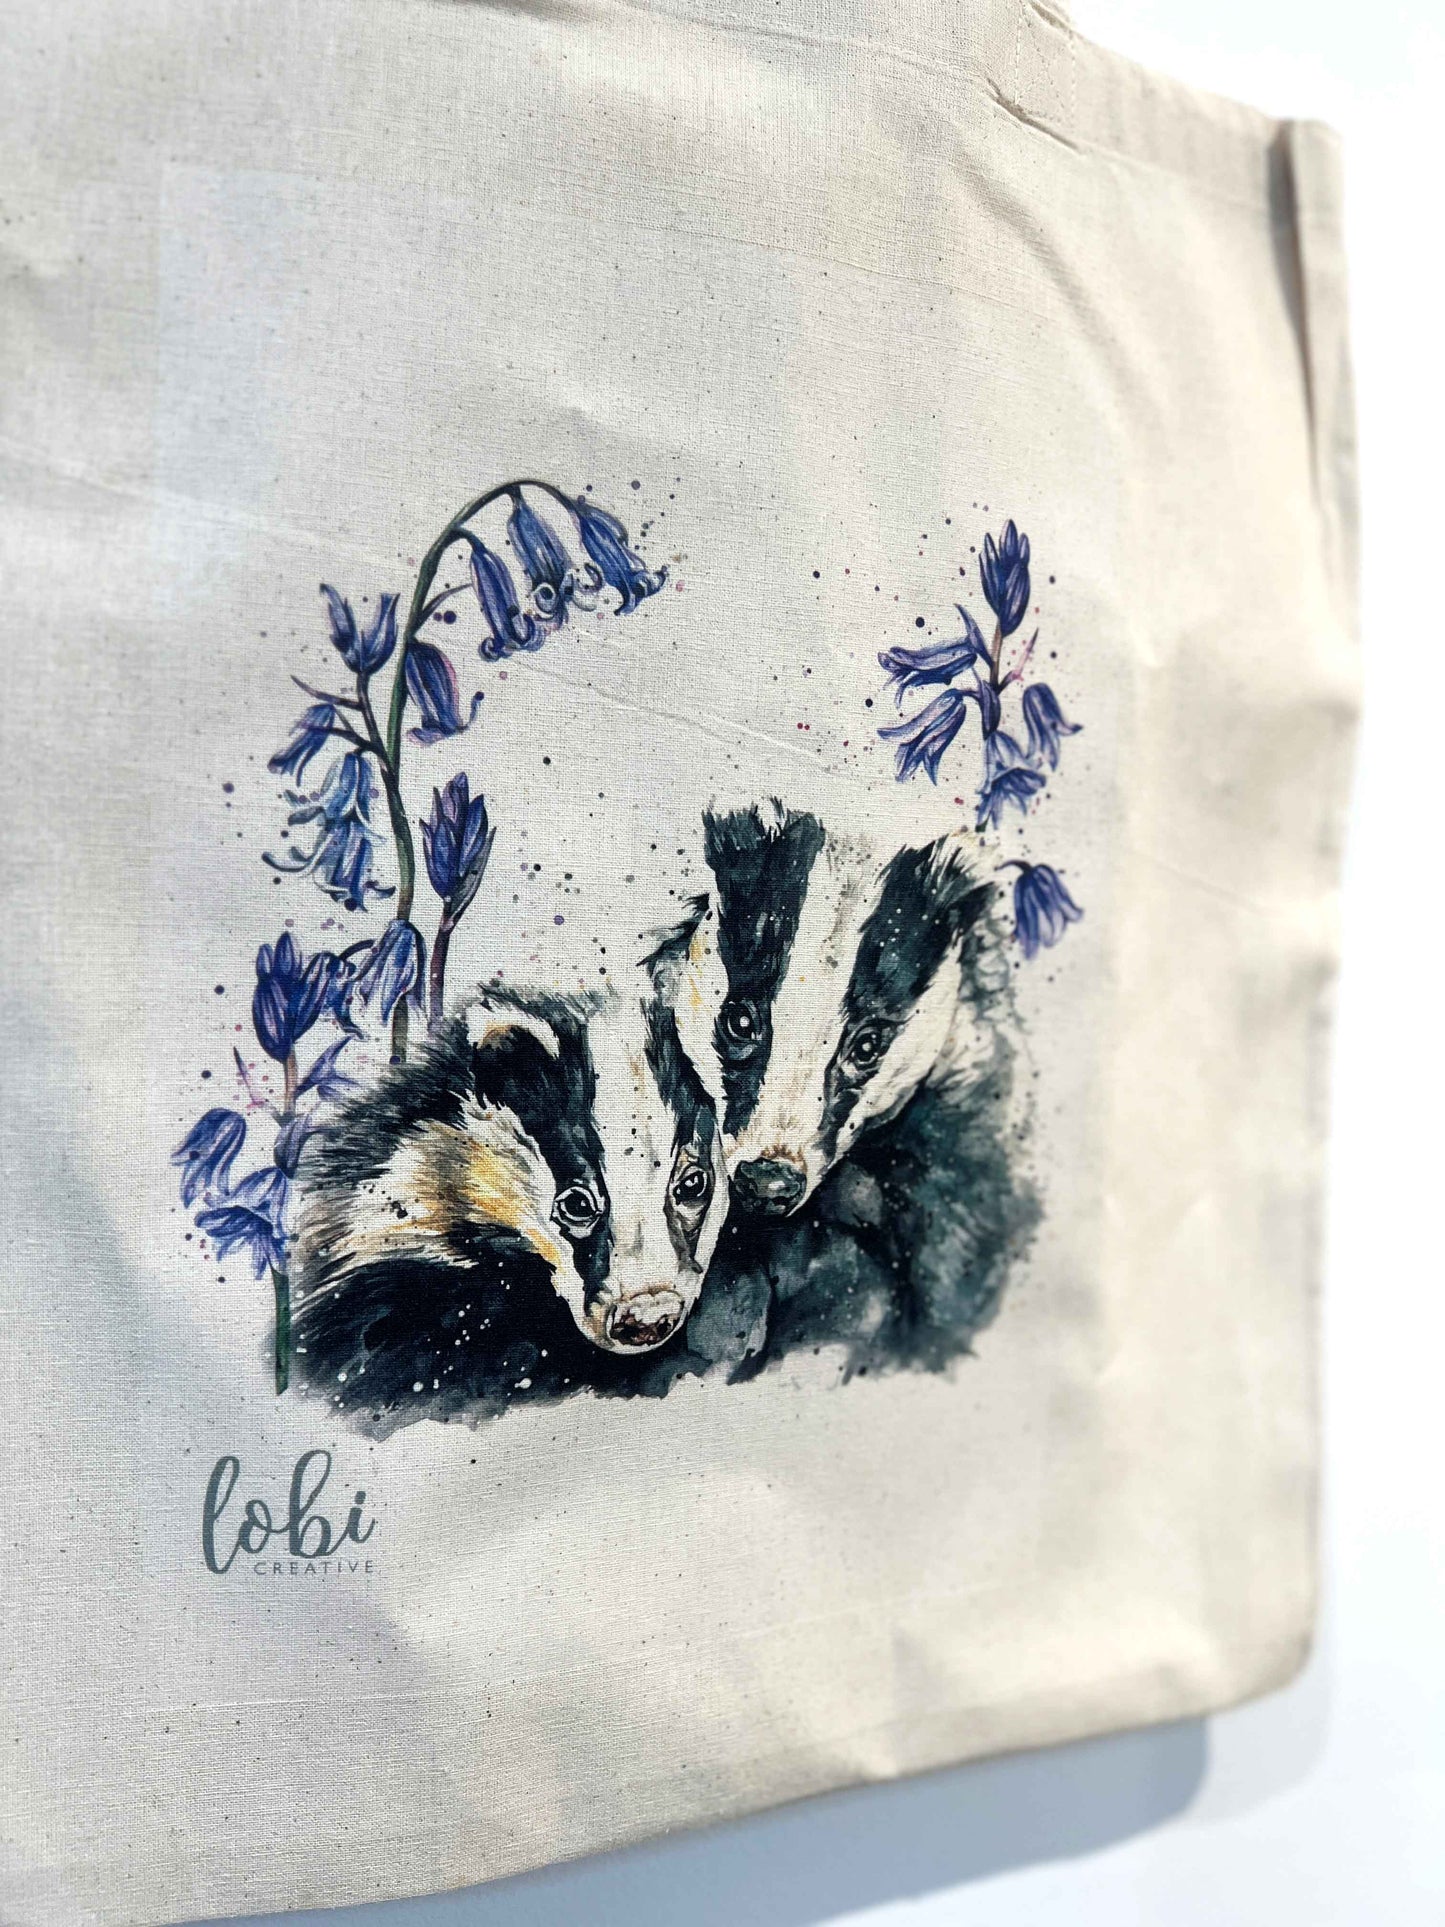 Watercolour Badger Cotton Tote Bag